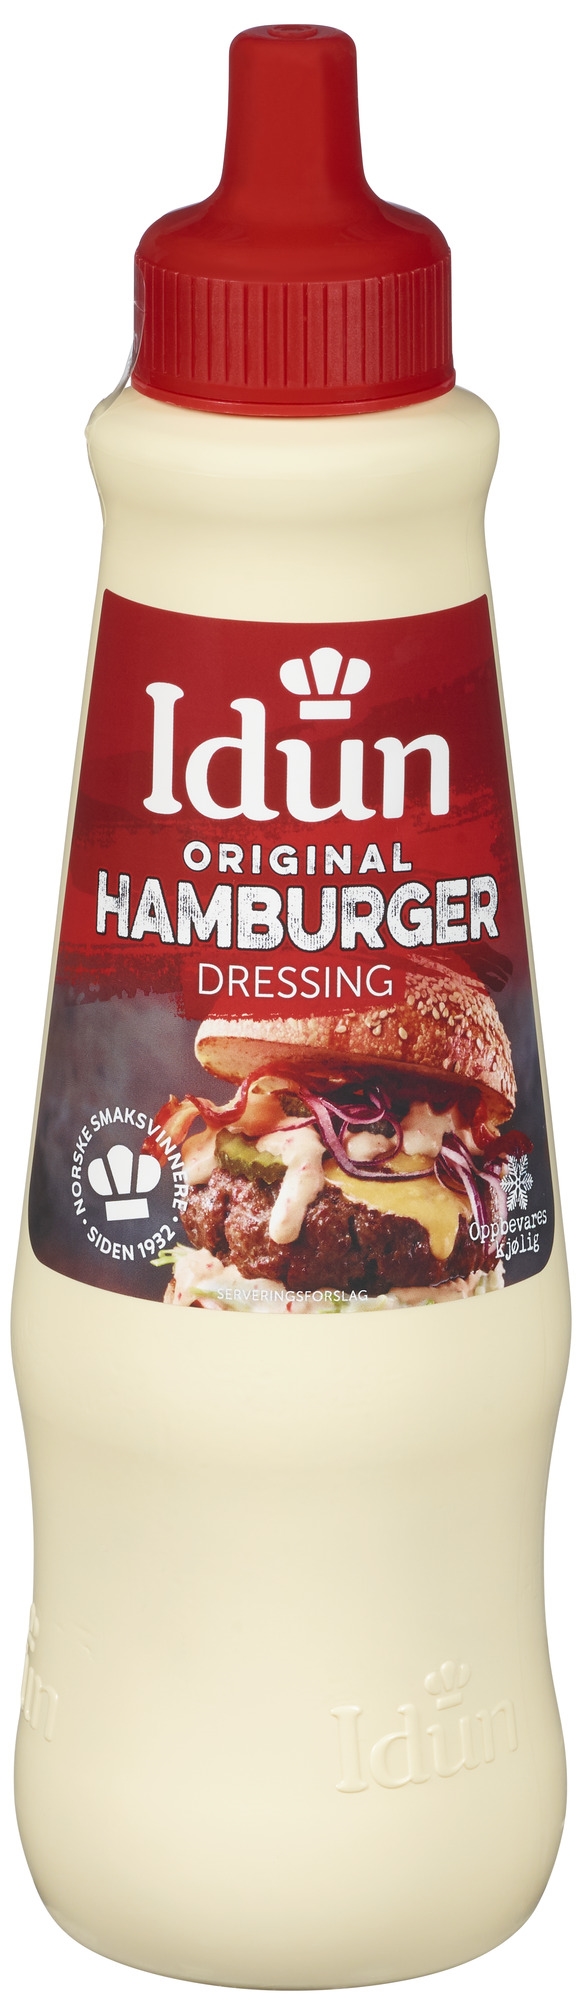 Idun hamburgerdressing   795g